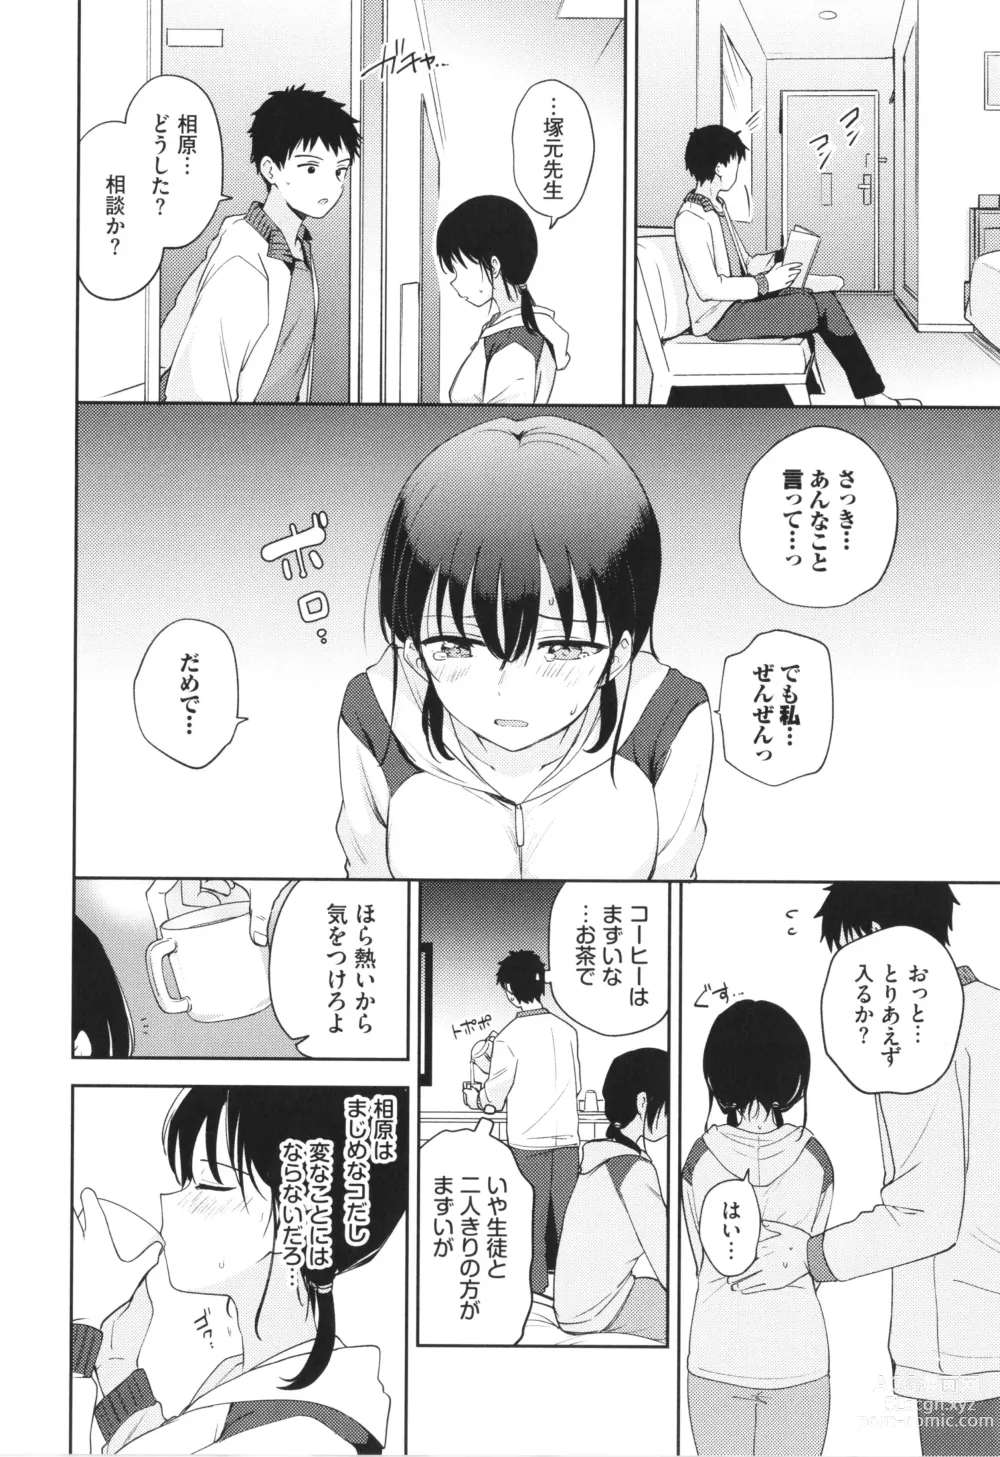 Page 29 of manga Secret Time